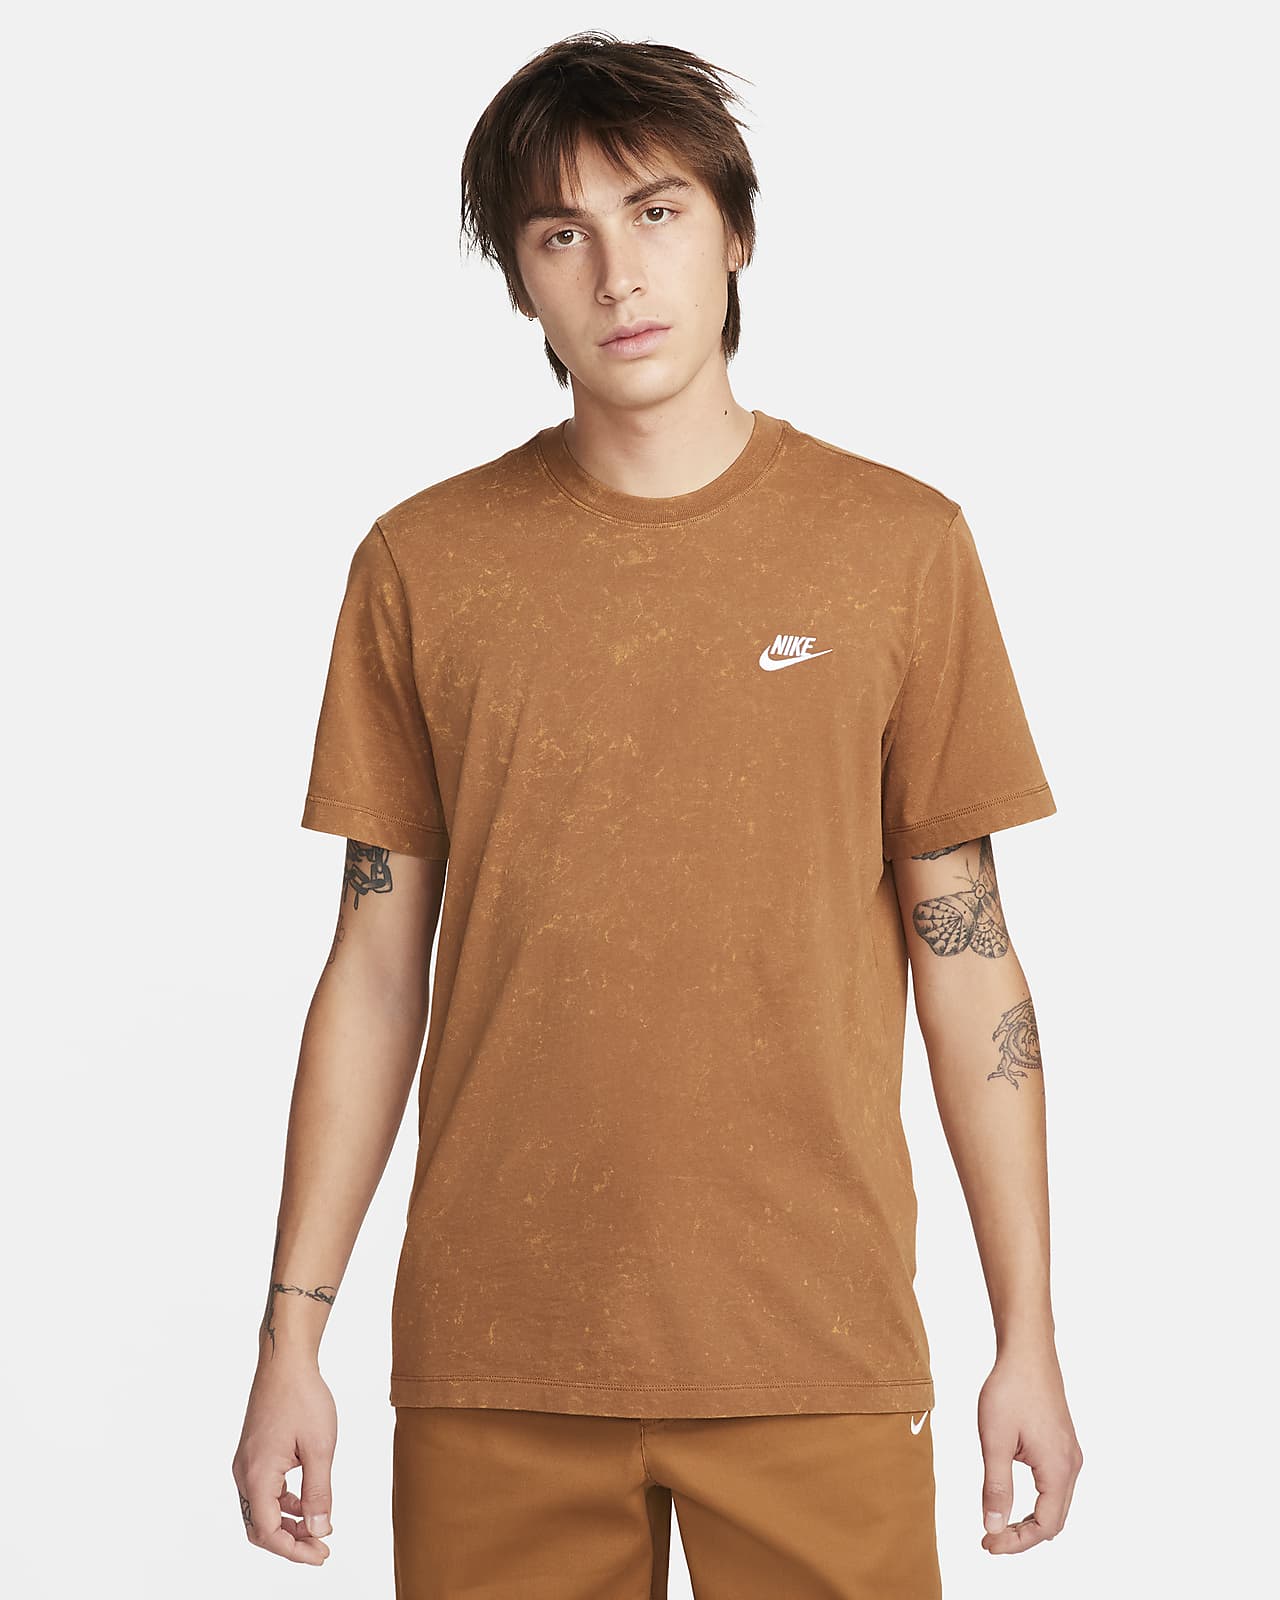 Club Men\'s Nike T-Shirt. Sportswear